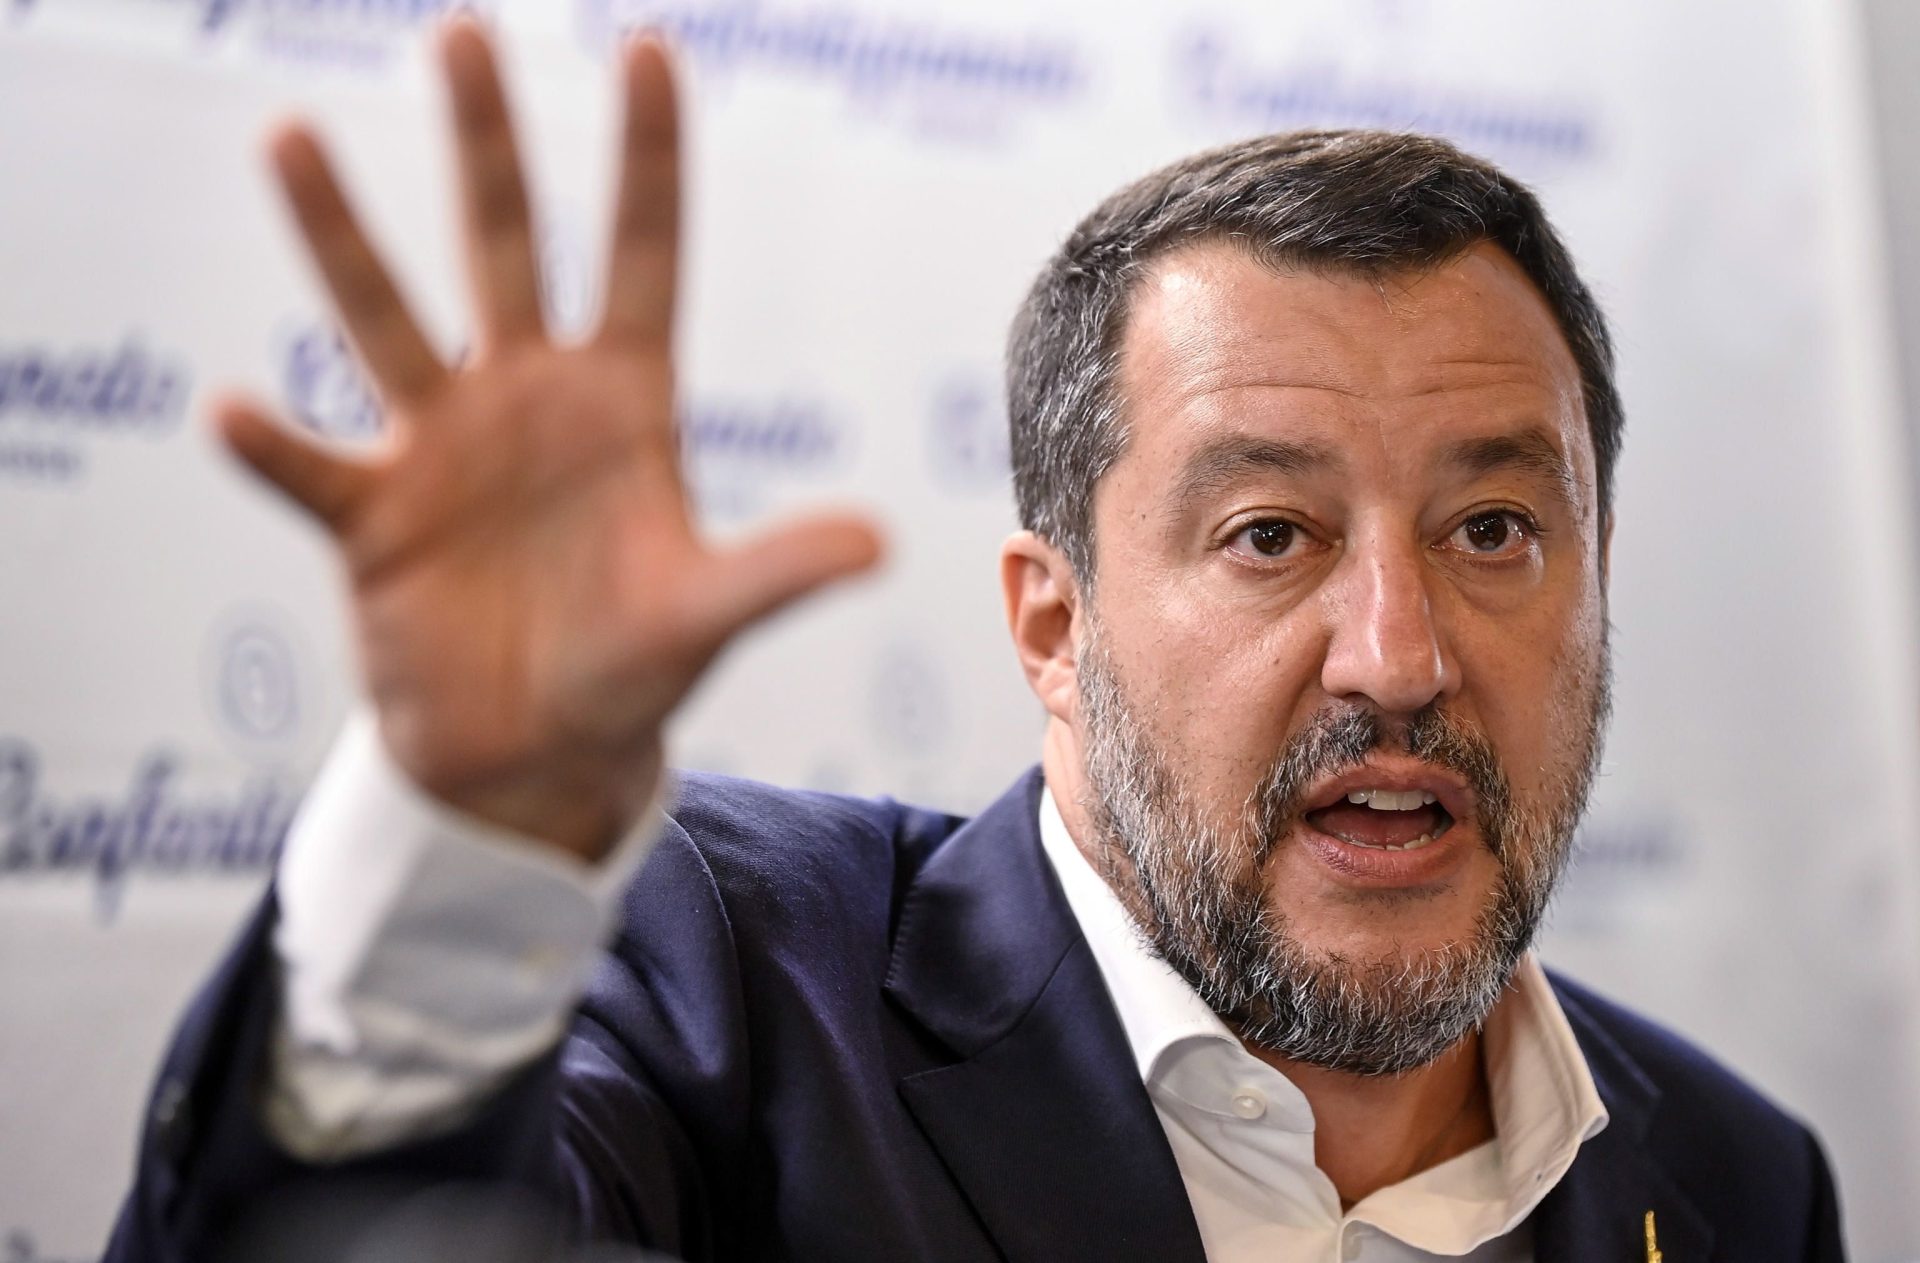 Matteo Salvini challenges the new Italian government